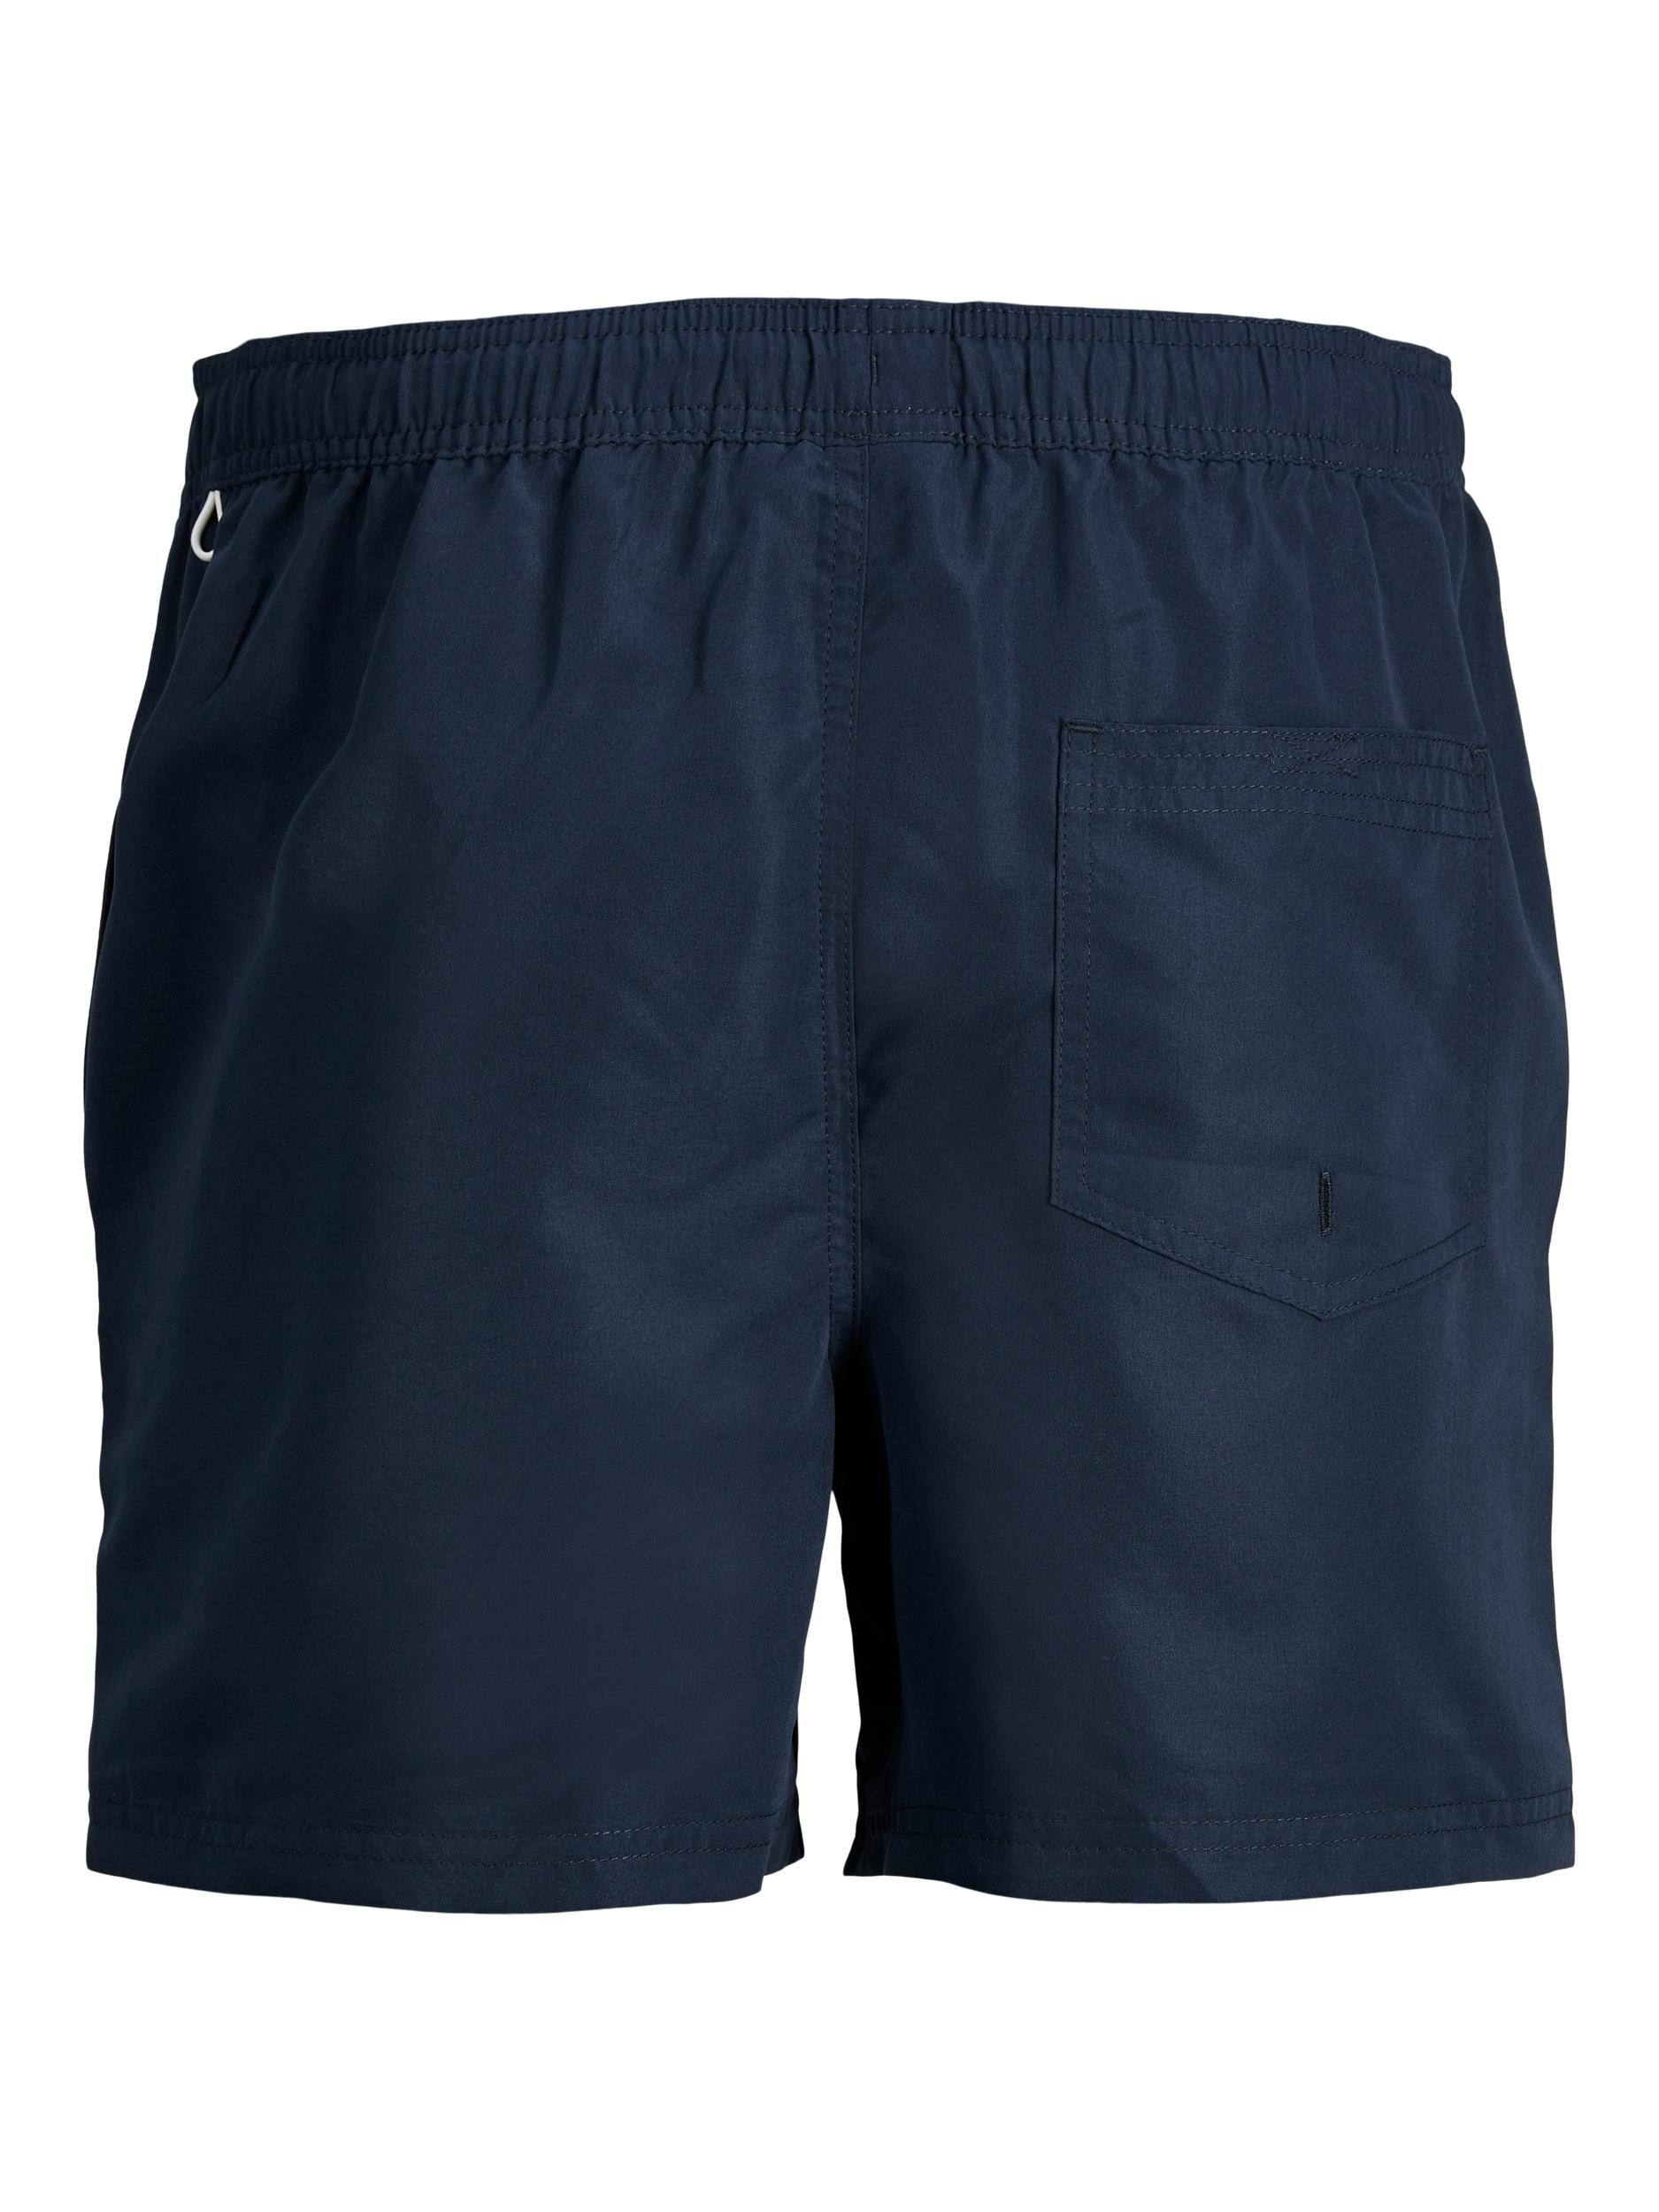 Jack & Jones - Regular fit swim trunks, Dark Blue, large image number 1